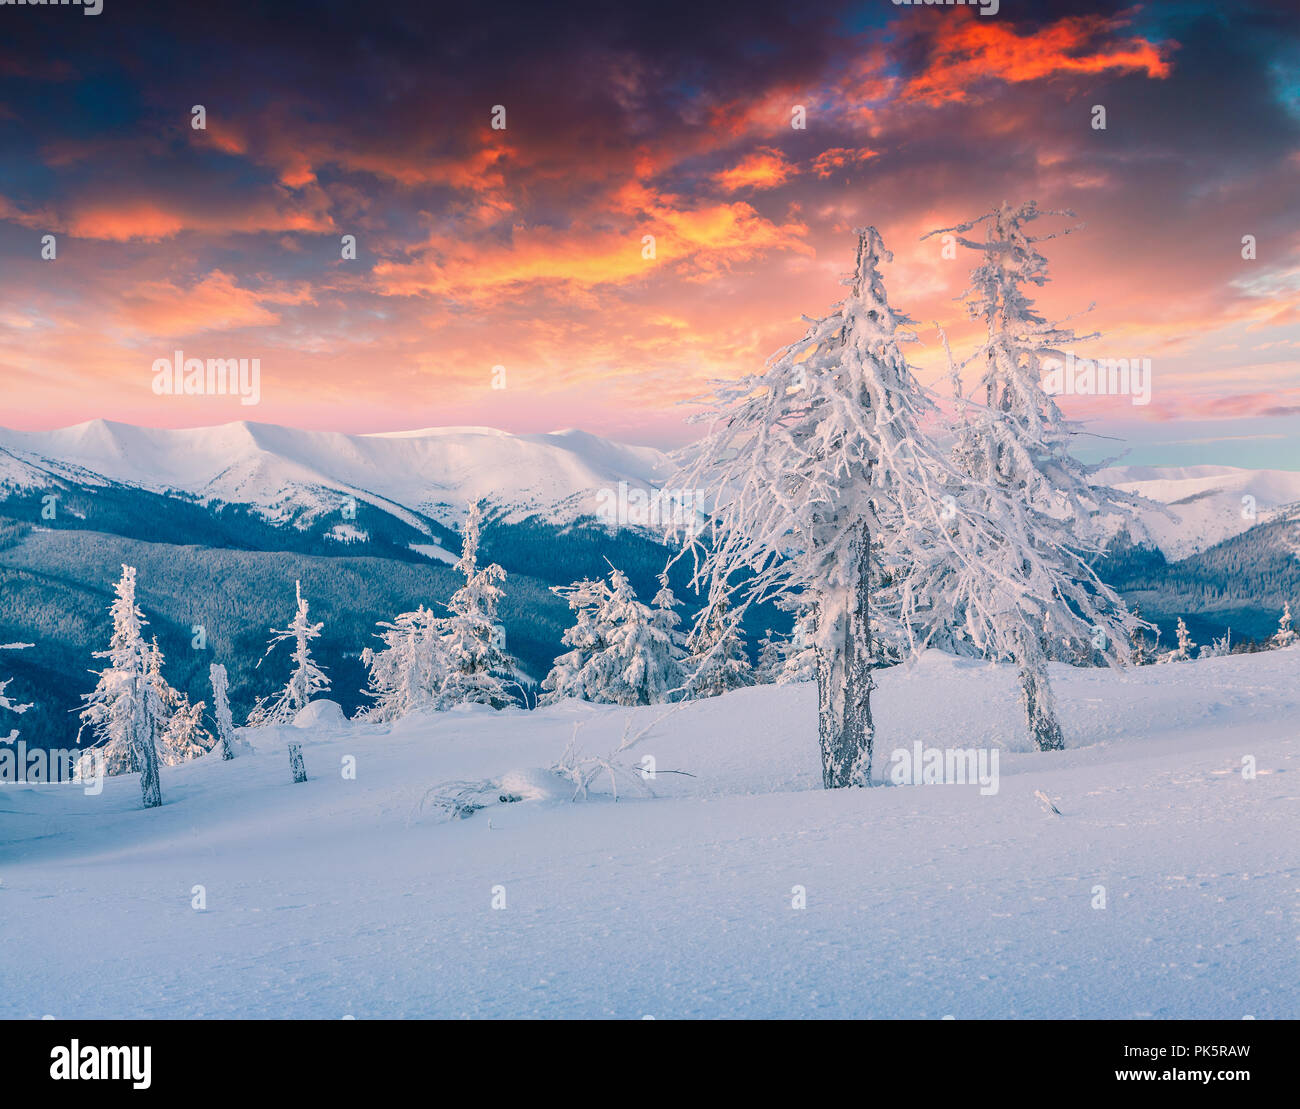 Bunte winter Szene, in den Snowy Mountains. Neuschnee bei frostigen Morgen glühende erste Sonnenlicht. Instagram Muskelaufbau. Stockfoto